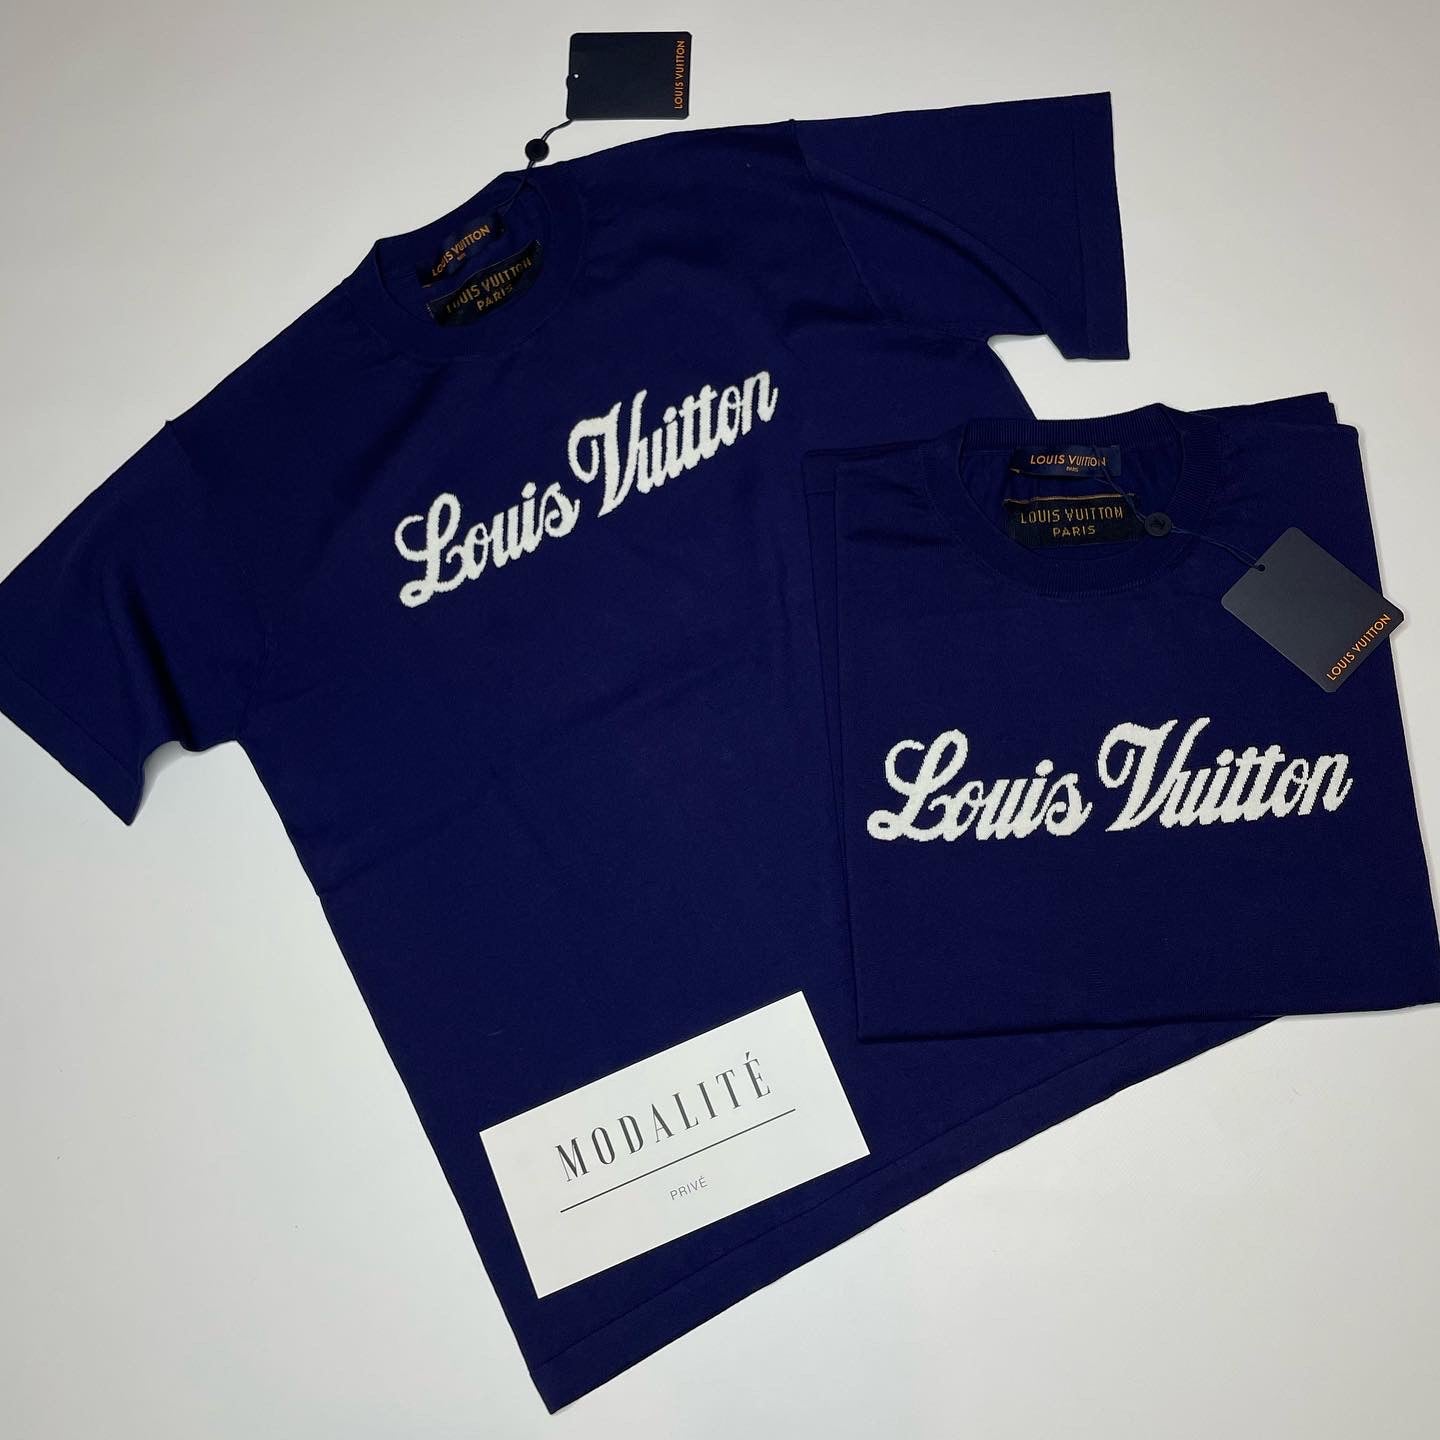 Louis Vuitton Monogram T-shirt – Modalite Prive